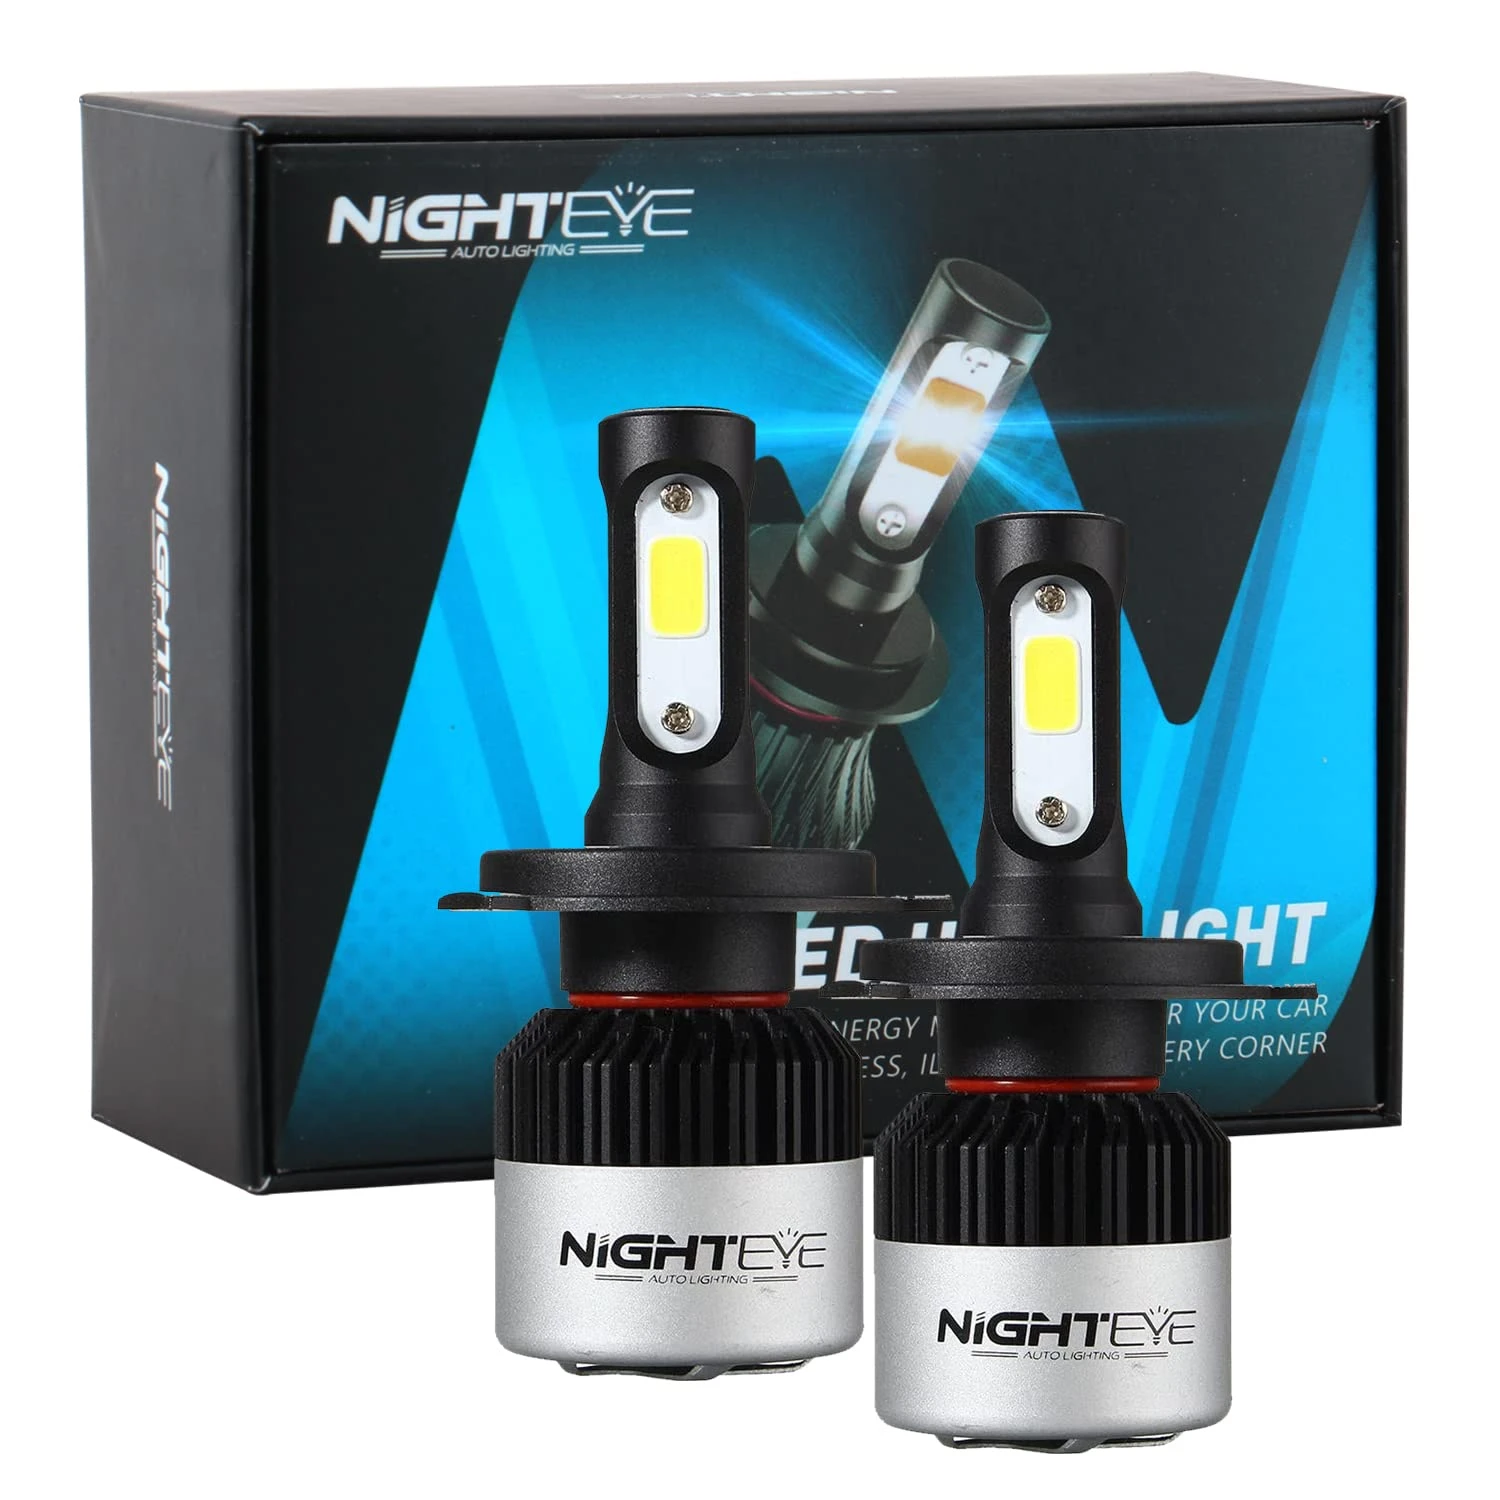 NIGHTEYE HB3 9005 Auto LED Headlight Bulbs Kit - 72w 9000LM 6500K Cool White